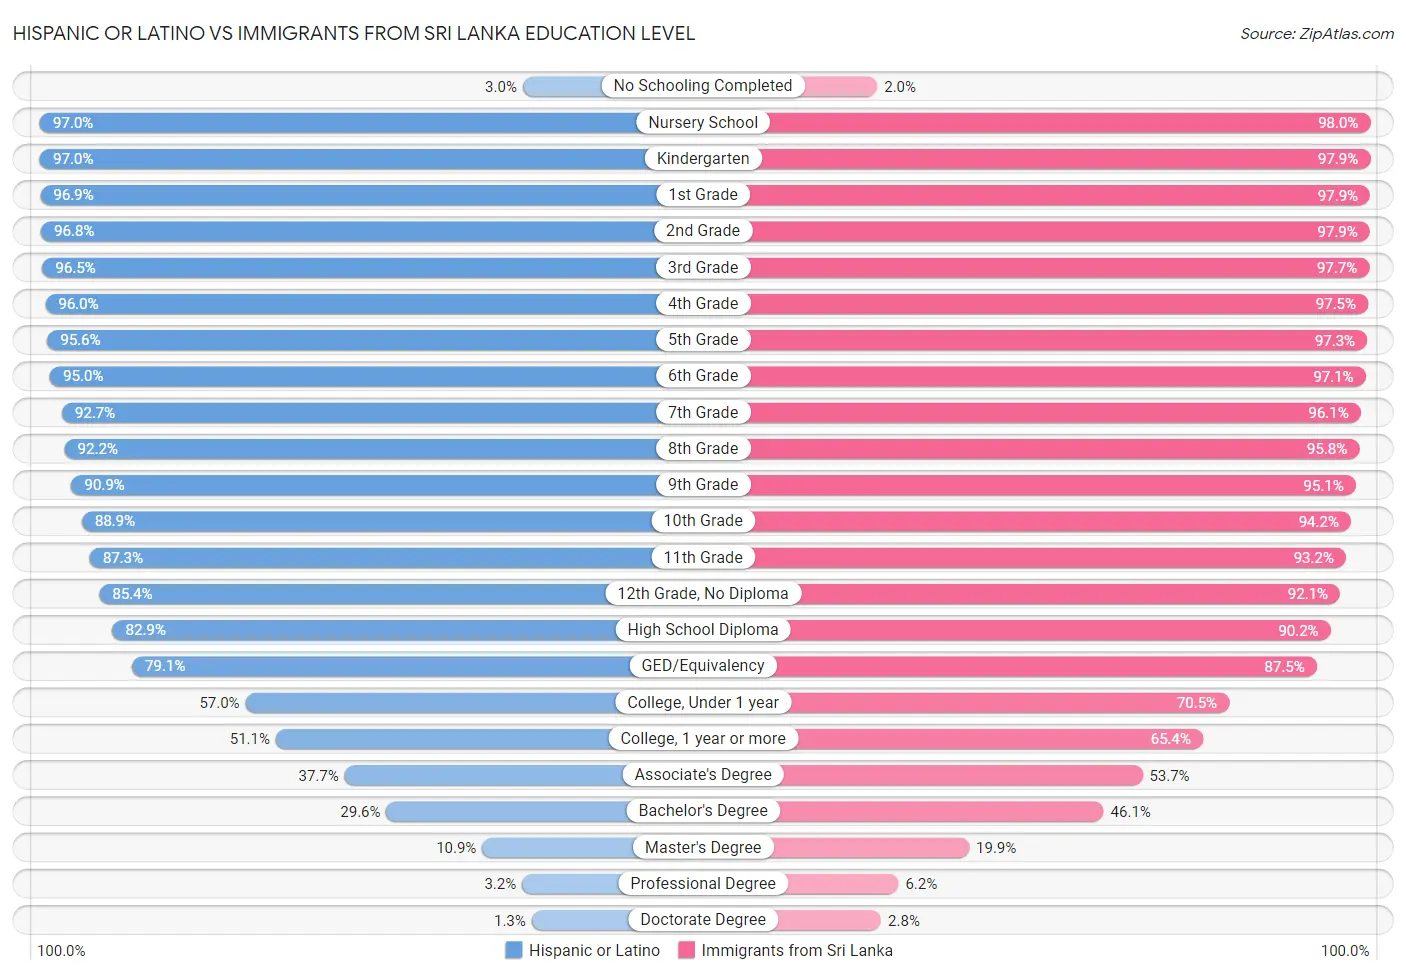 Hispanic or Latino vs Immigrants from Sri Lanka Education Level